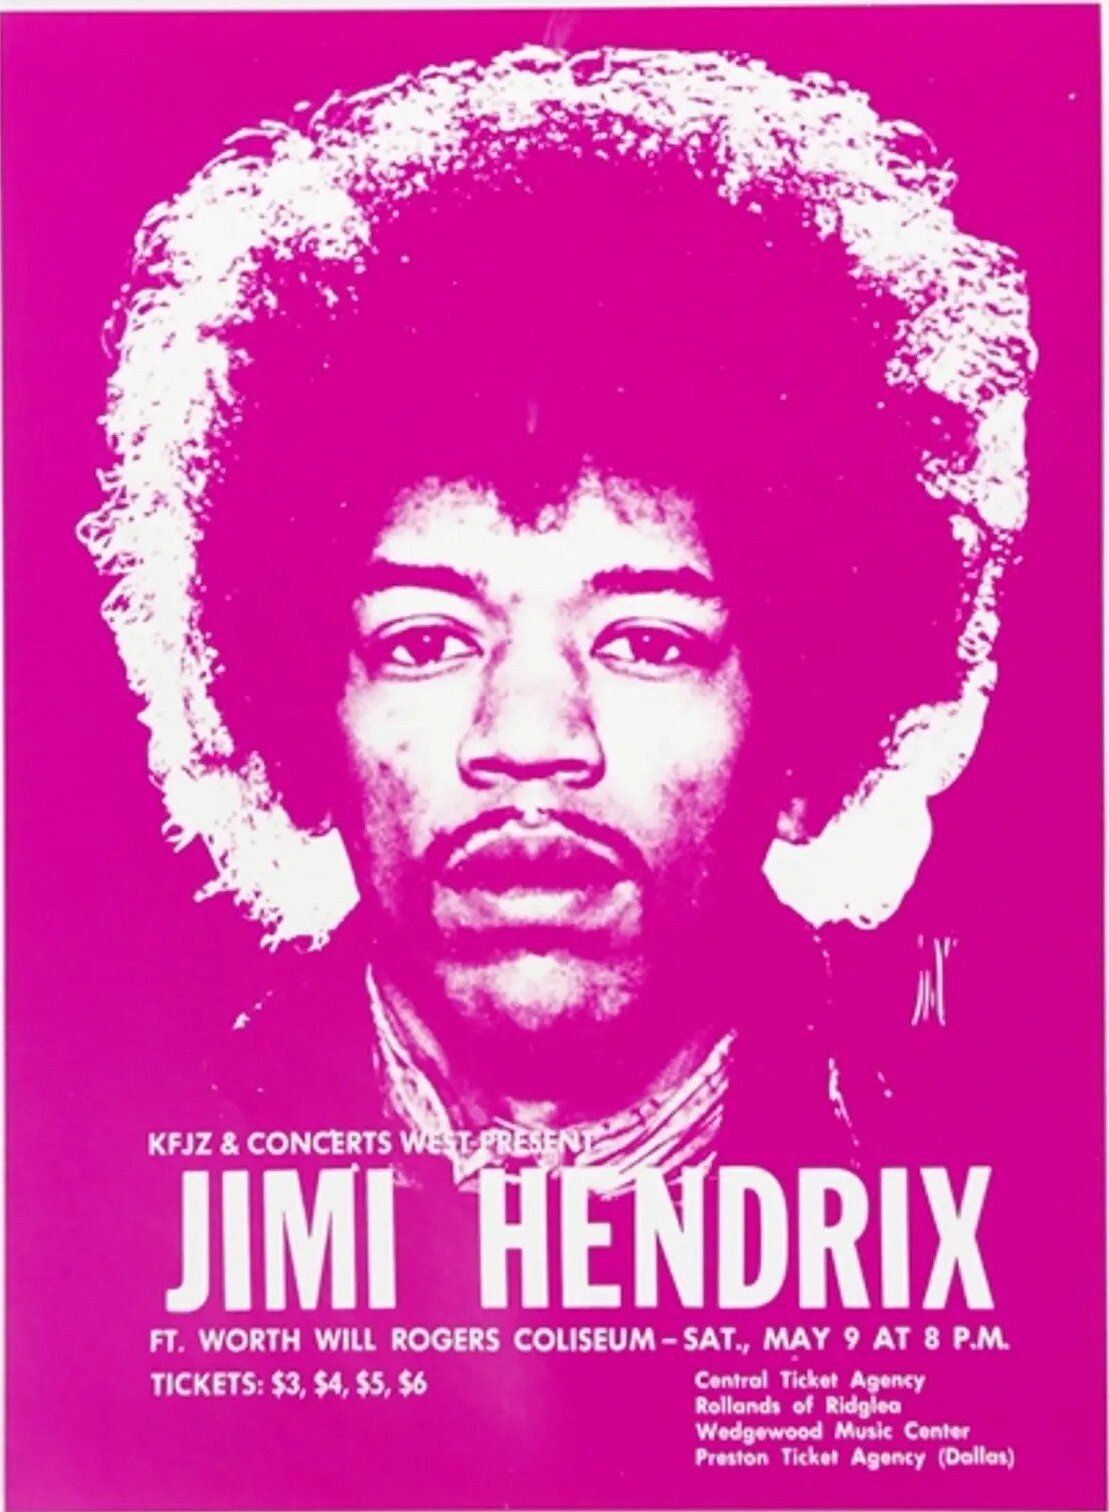 Jimi Hendrix Will Rogers Coliseum Handbill 1970 Concert Poster